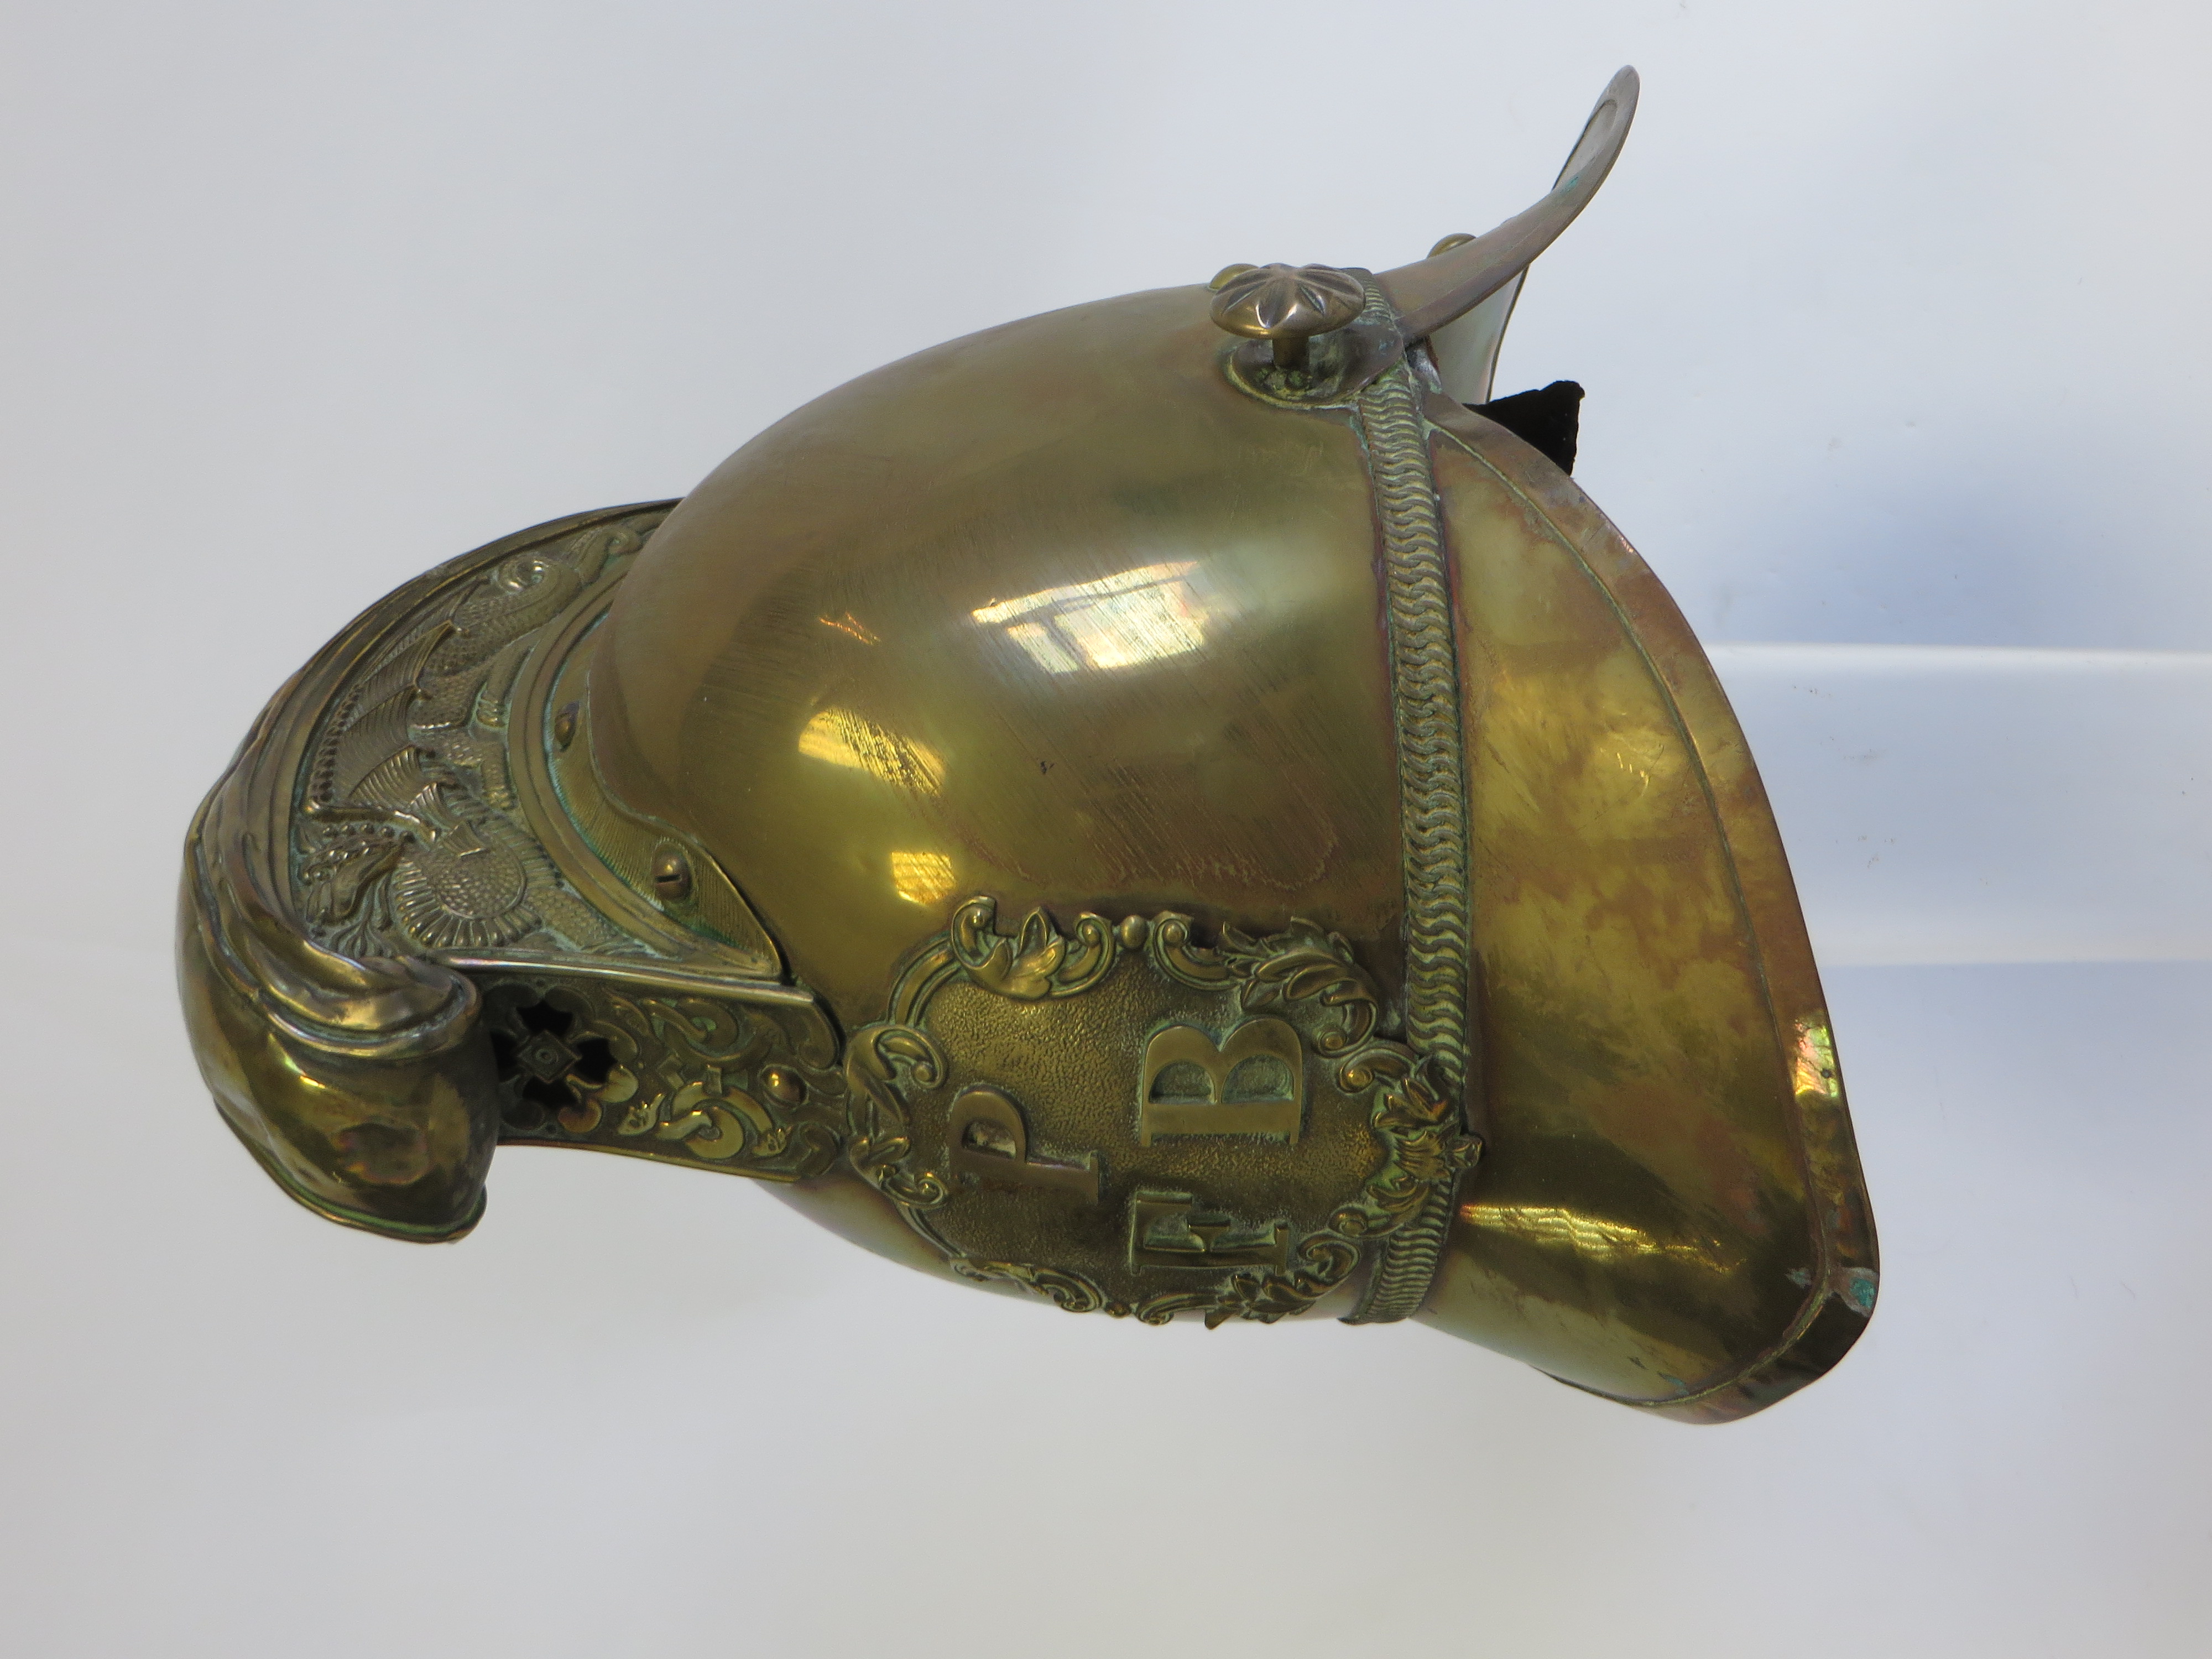 Late 19th Century Brass Fire Brigade Helmet brass high crown, pointed peak and swept rear brim. High